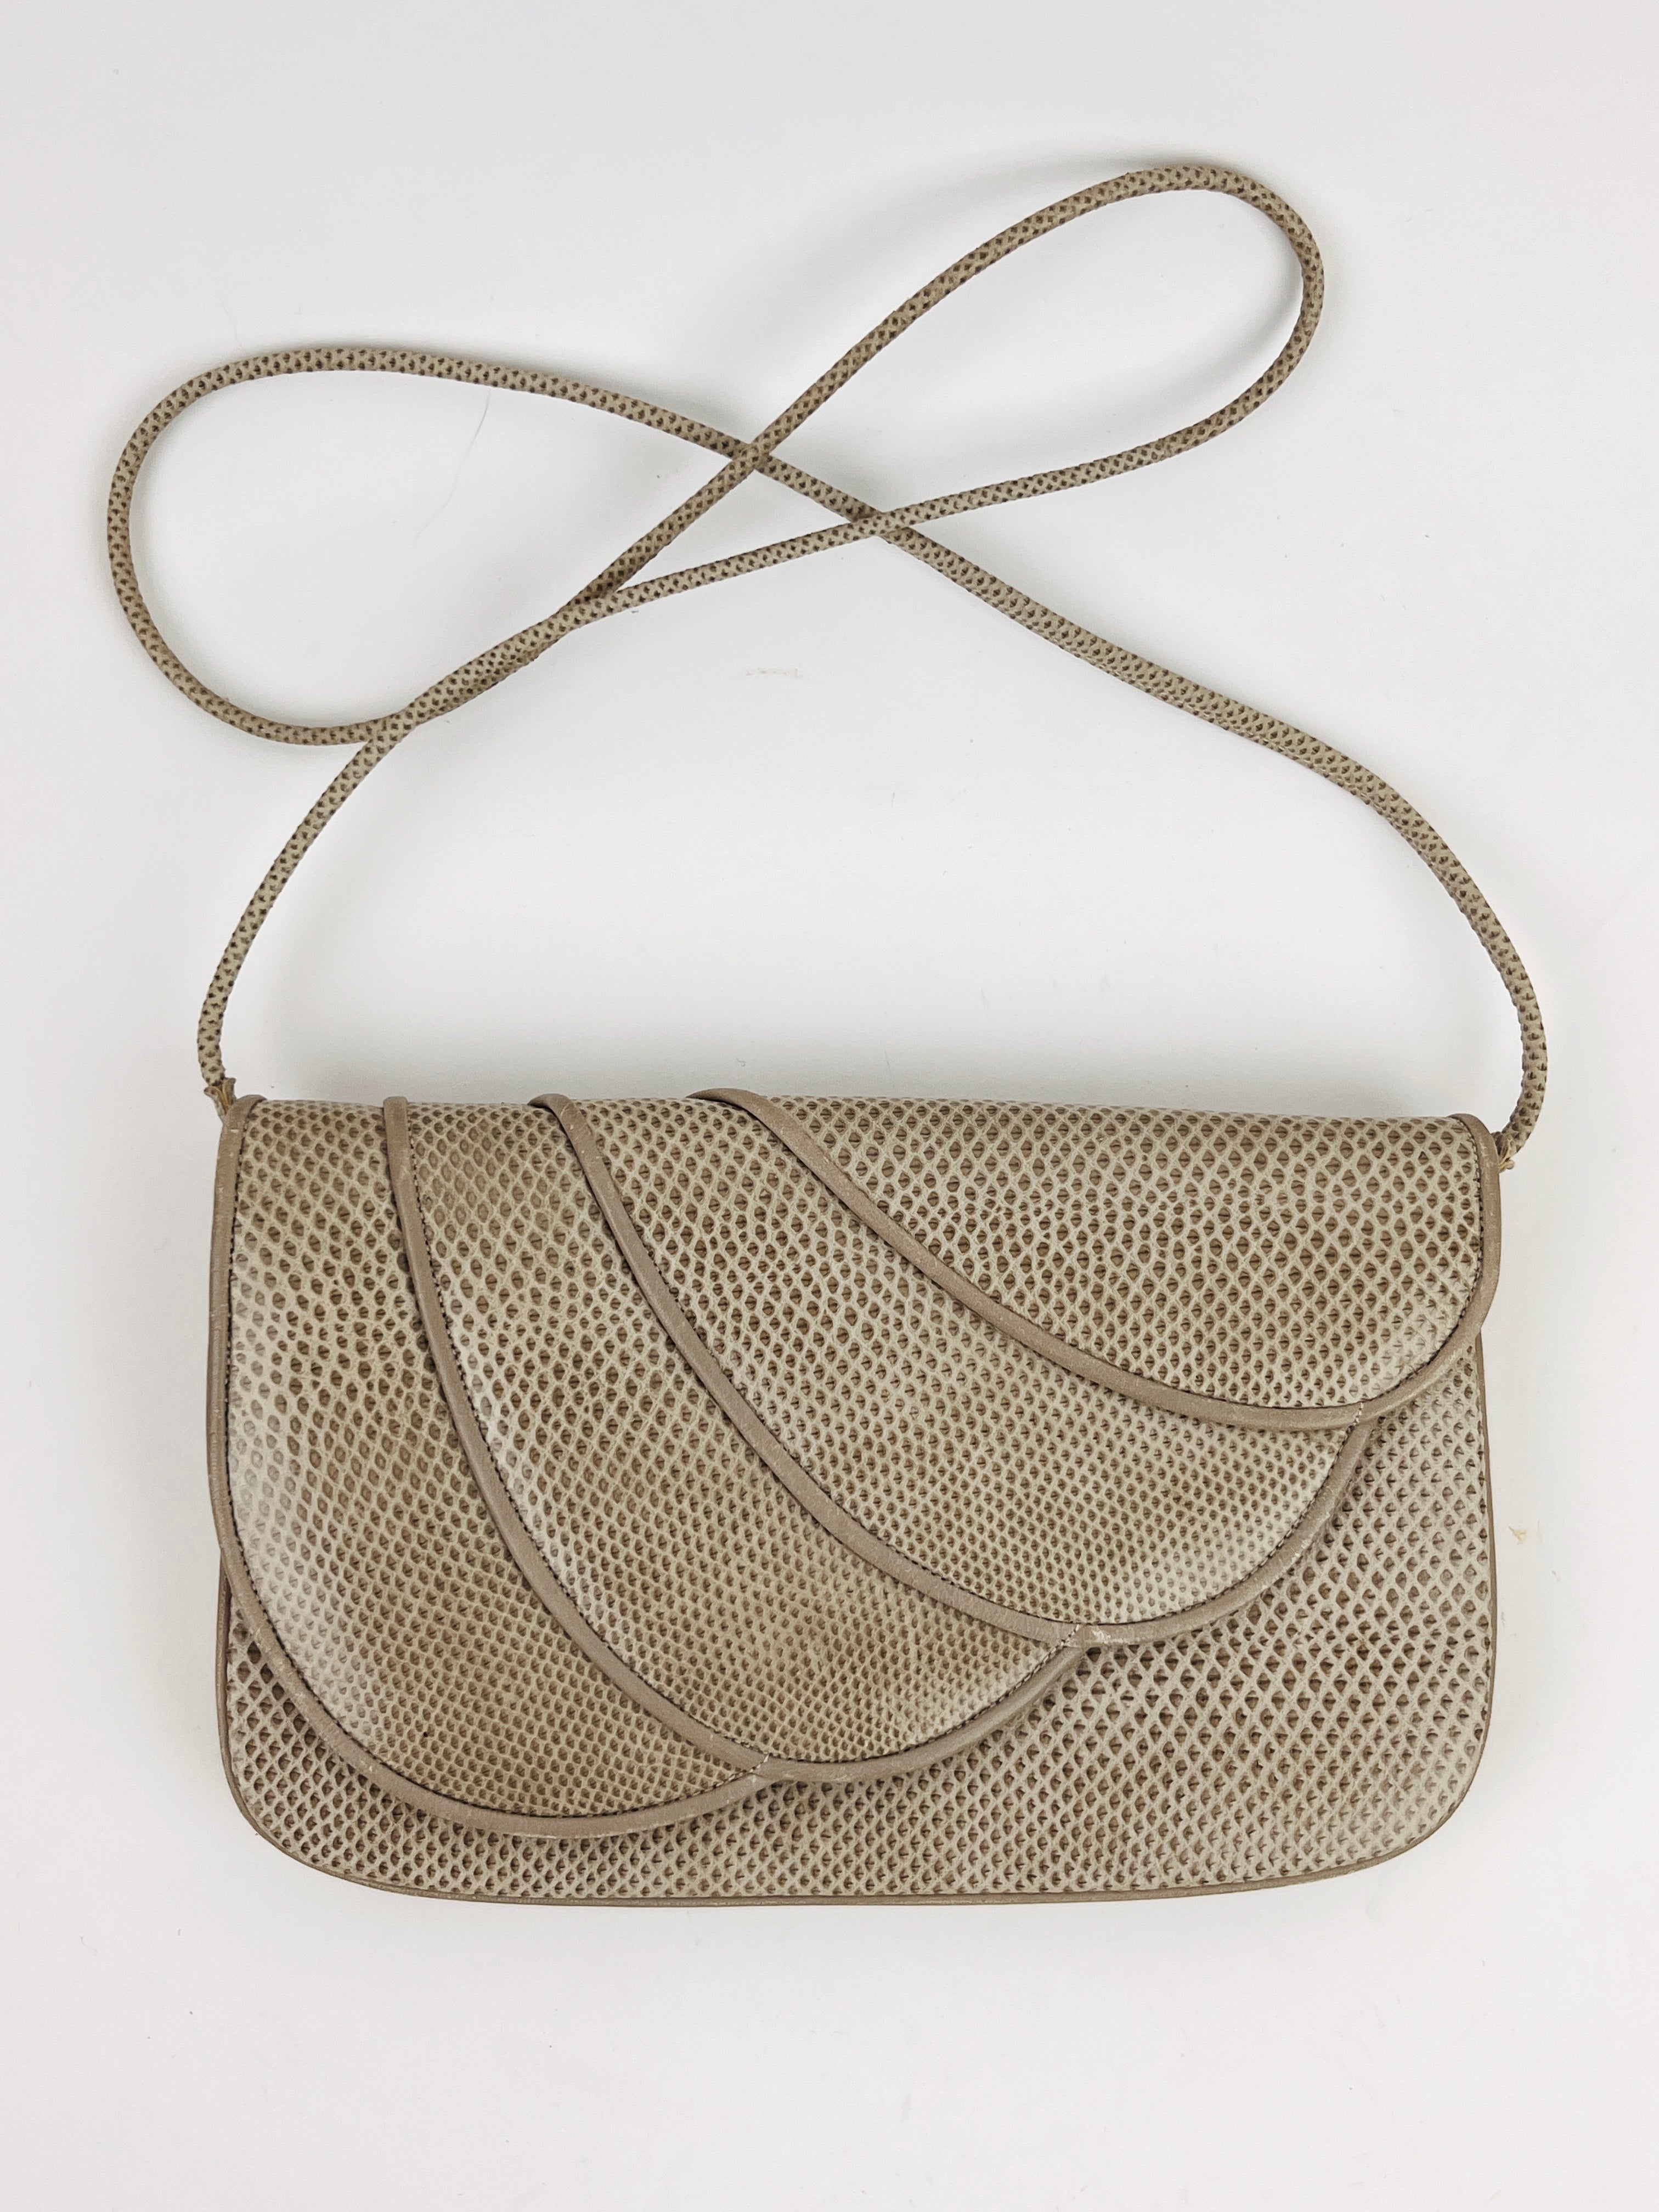 menotti | Bags | Menotti Made In Italy Real Python Snakeskin Bag Purse  Handbag Tan Beige Black | Poshmark